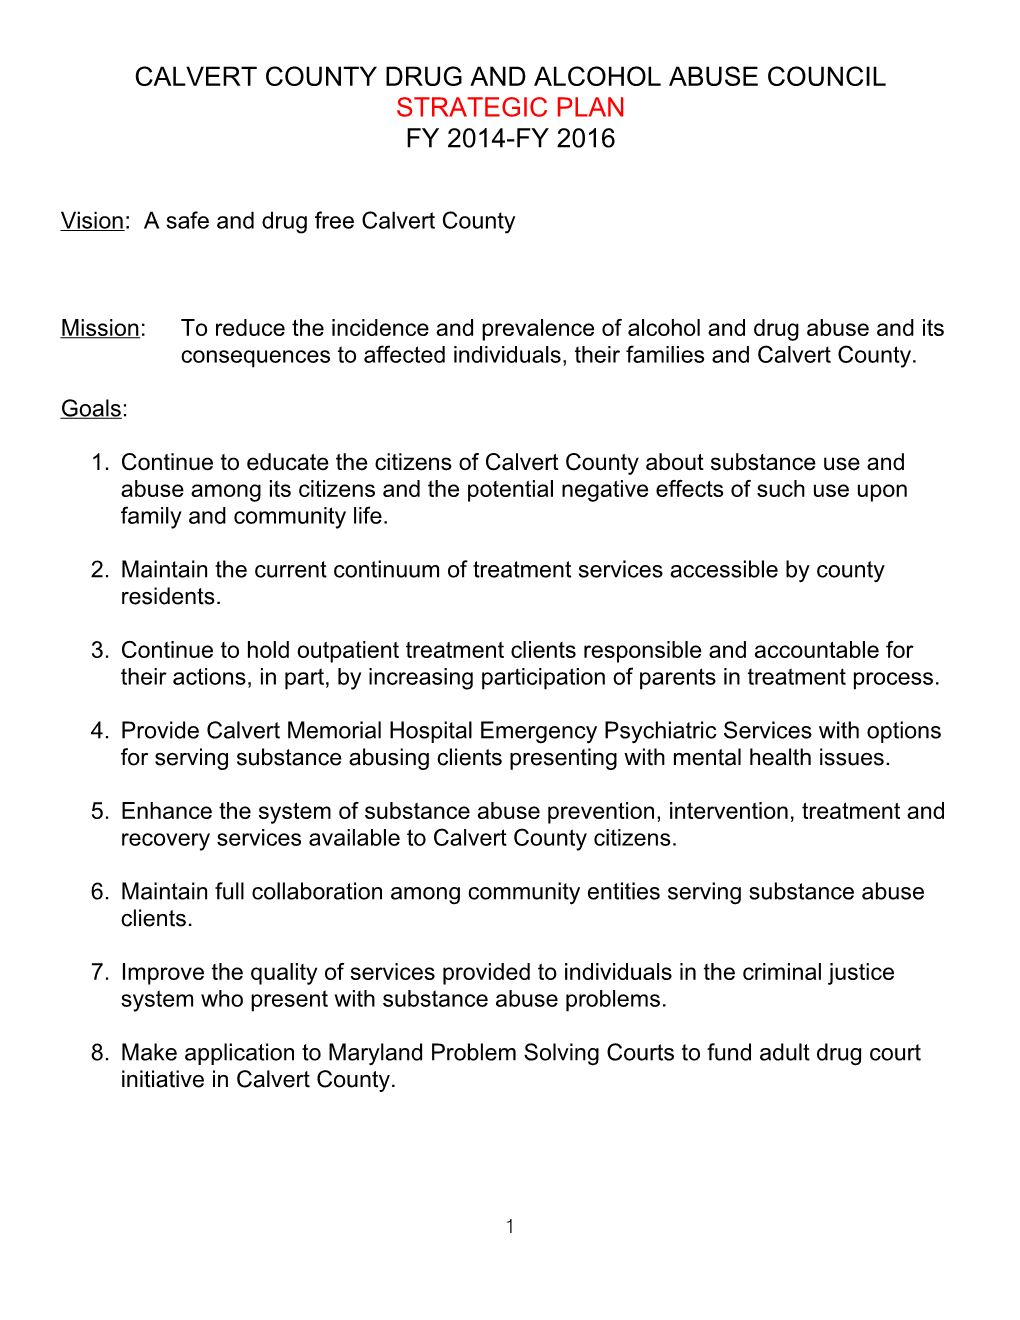 Calvert County Drug and Alcohol Abuse Council